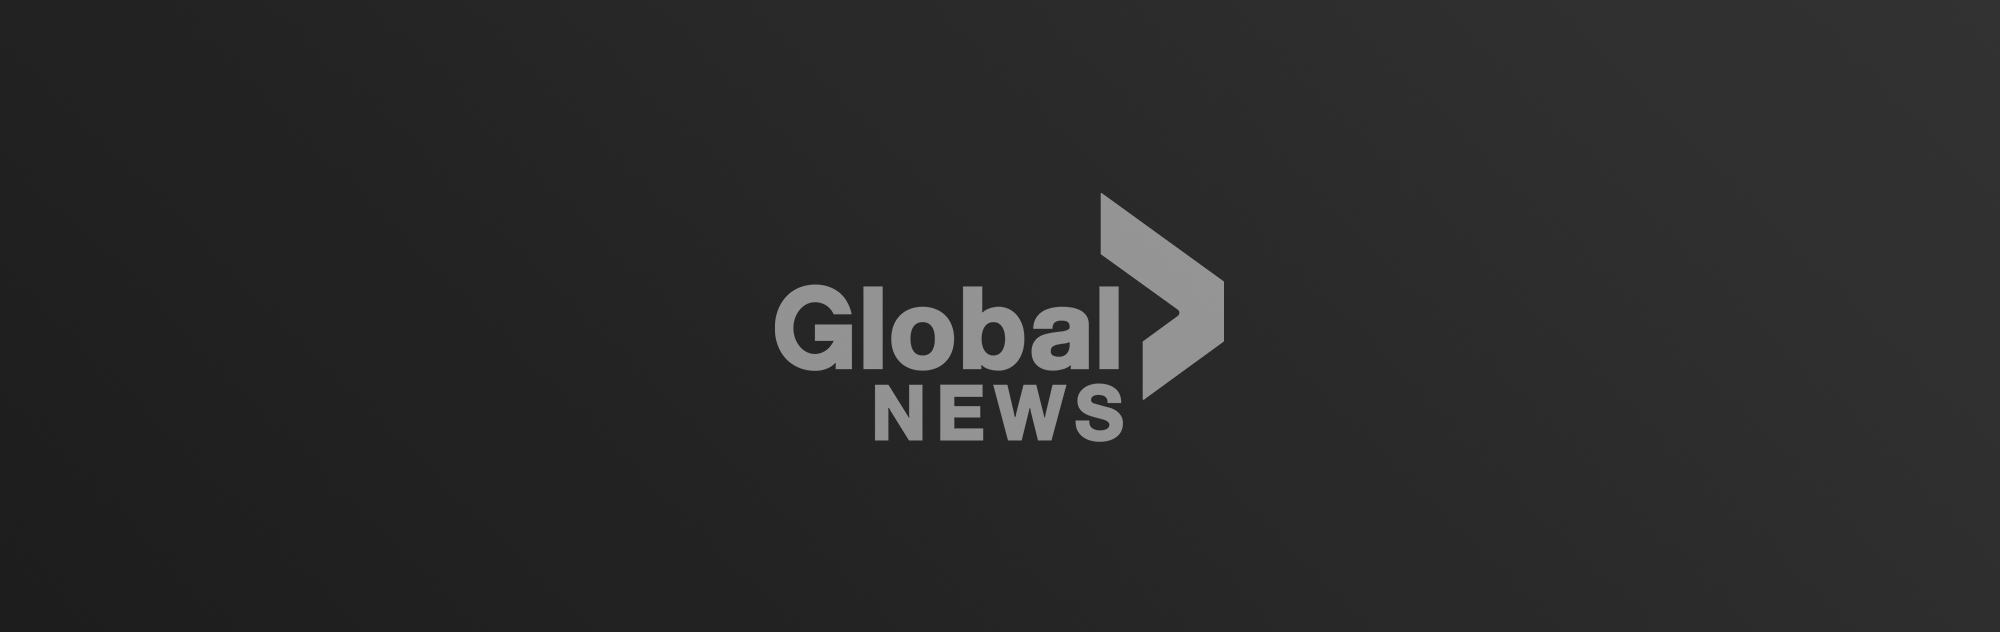 Global News logo on dark gradient background